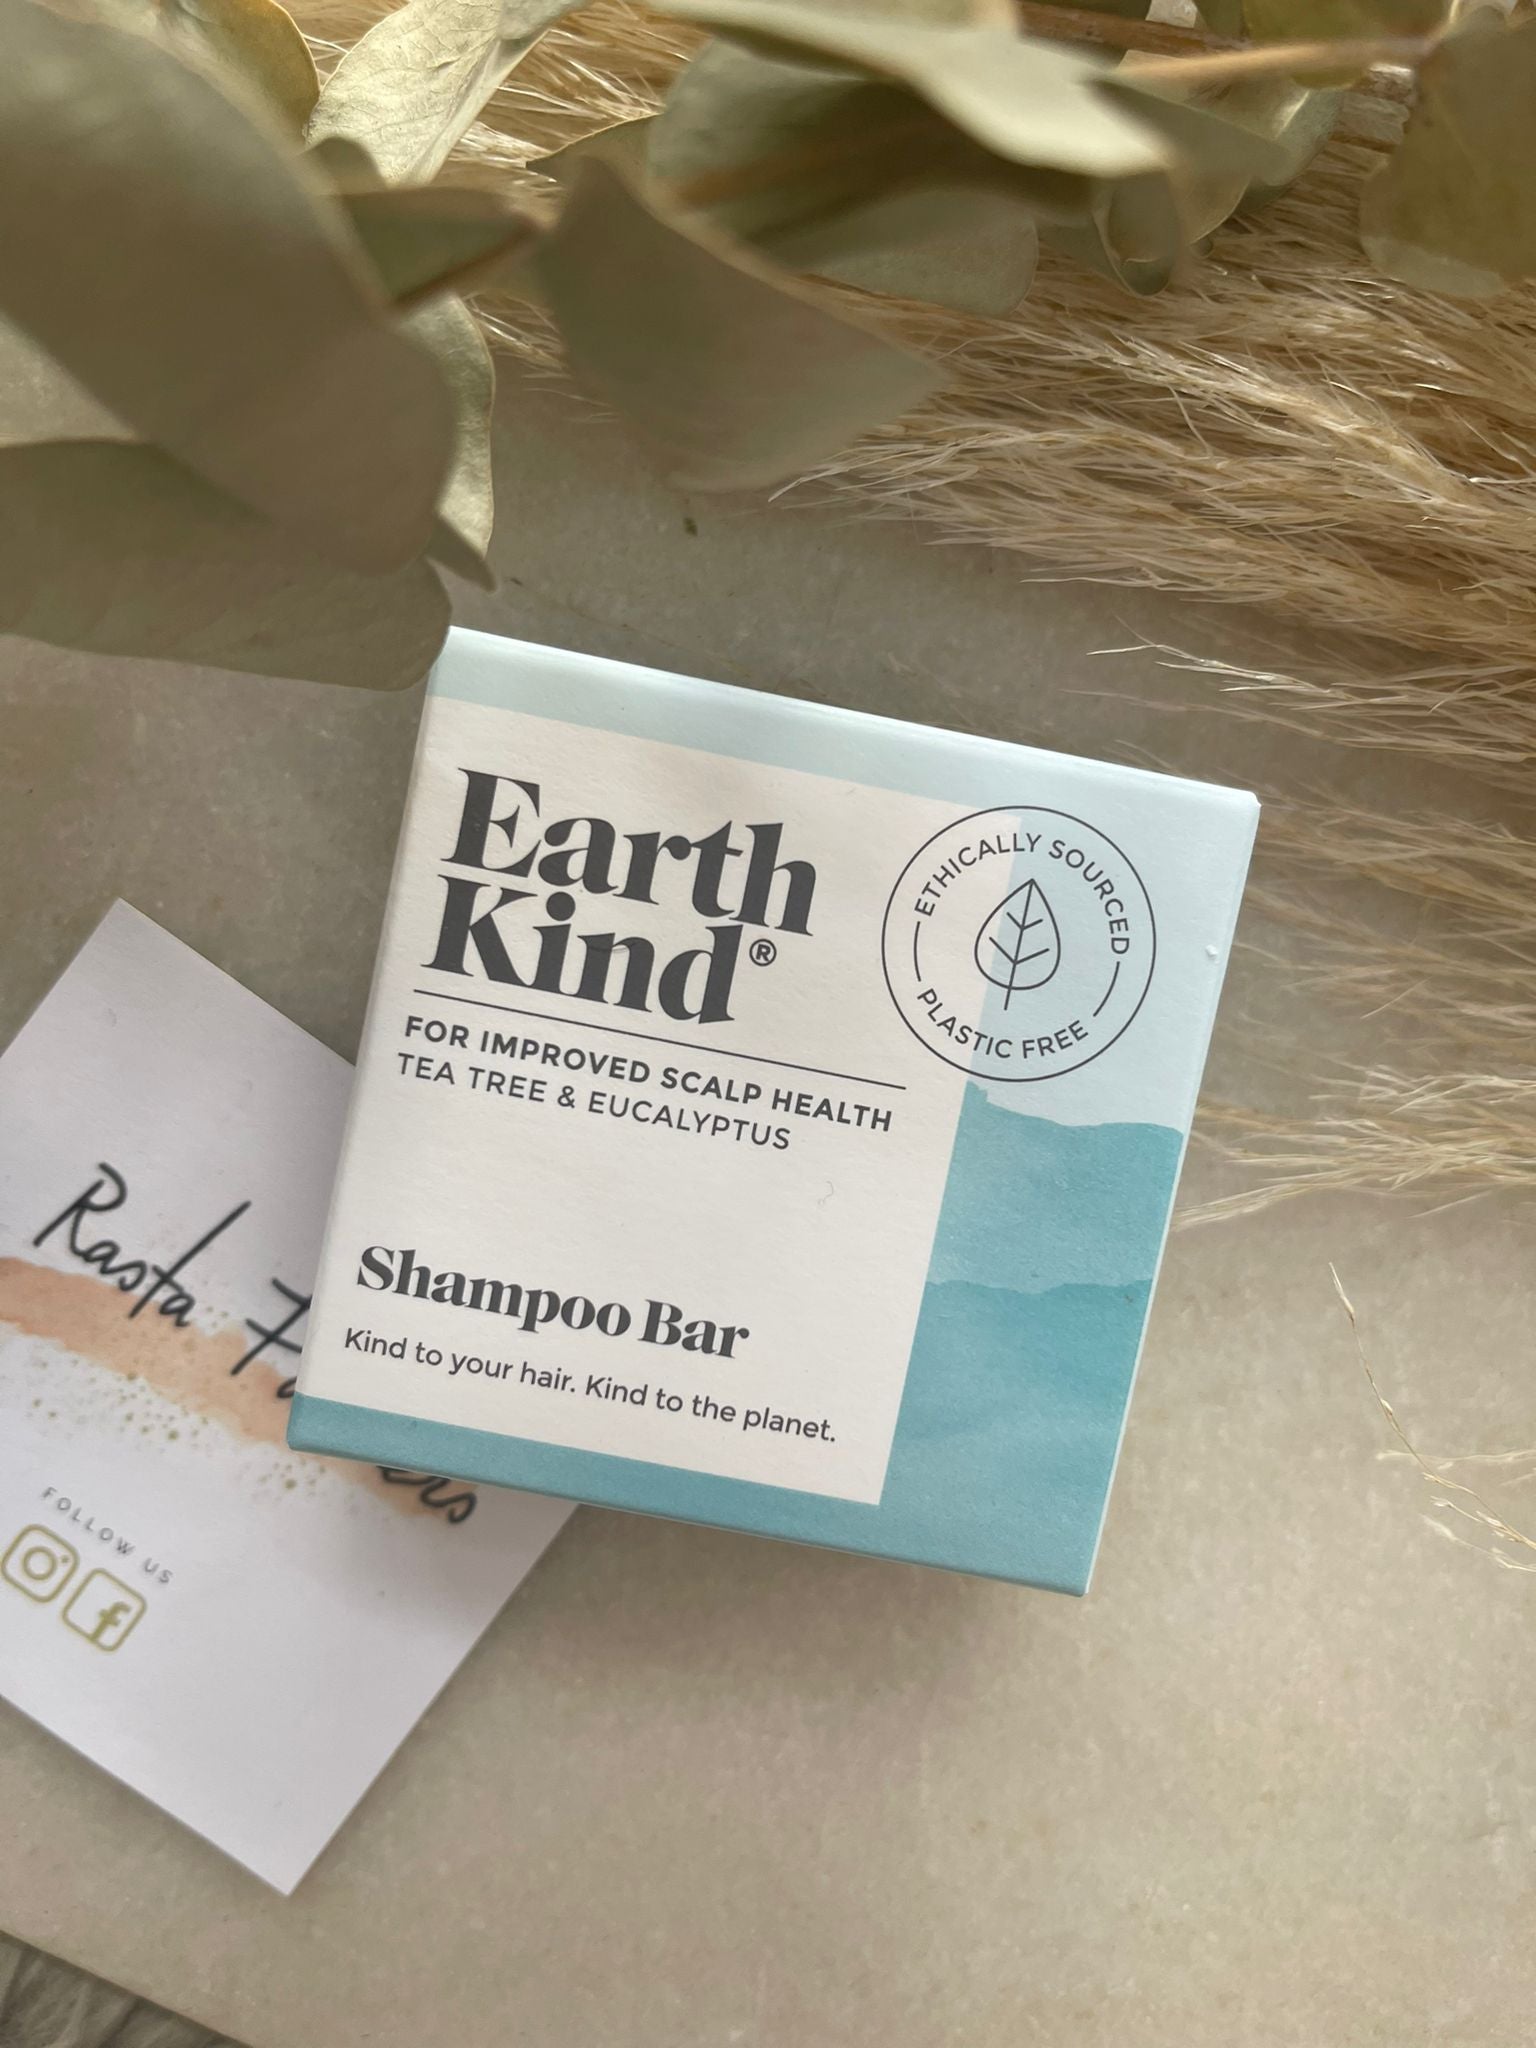 Earth Kind - Tea Tree & Eucalyptus Shampoo Bar - Improved Scalp Health